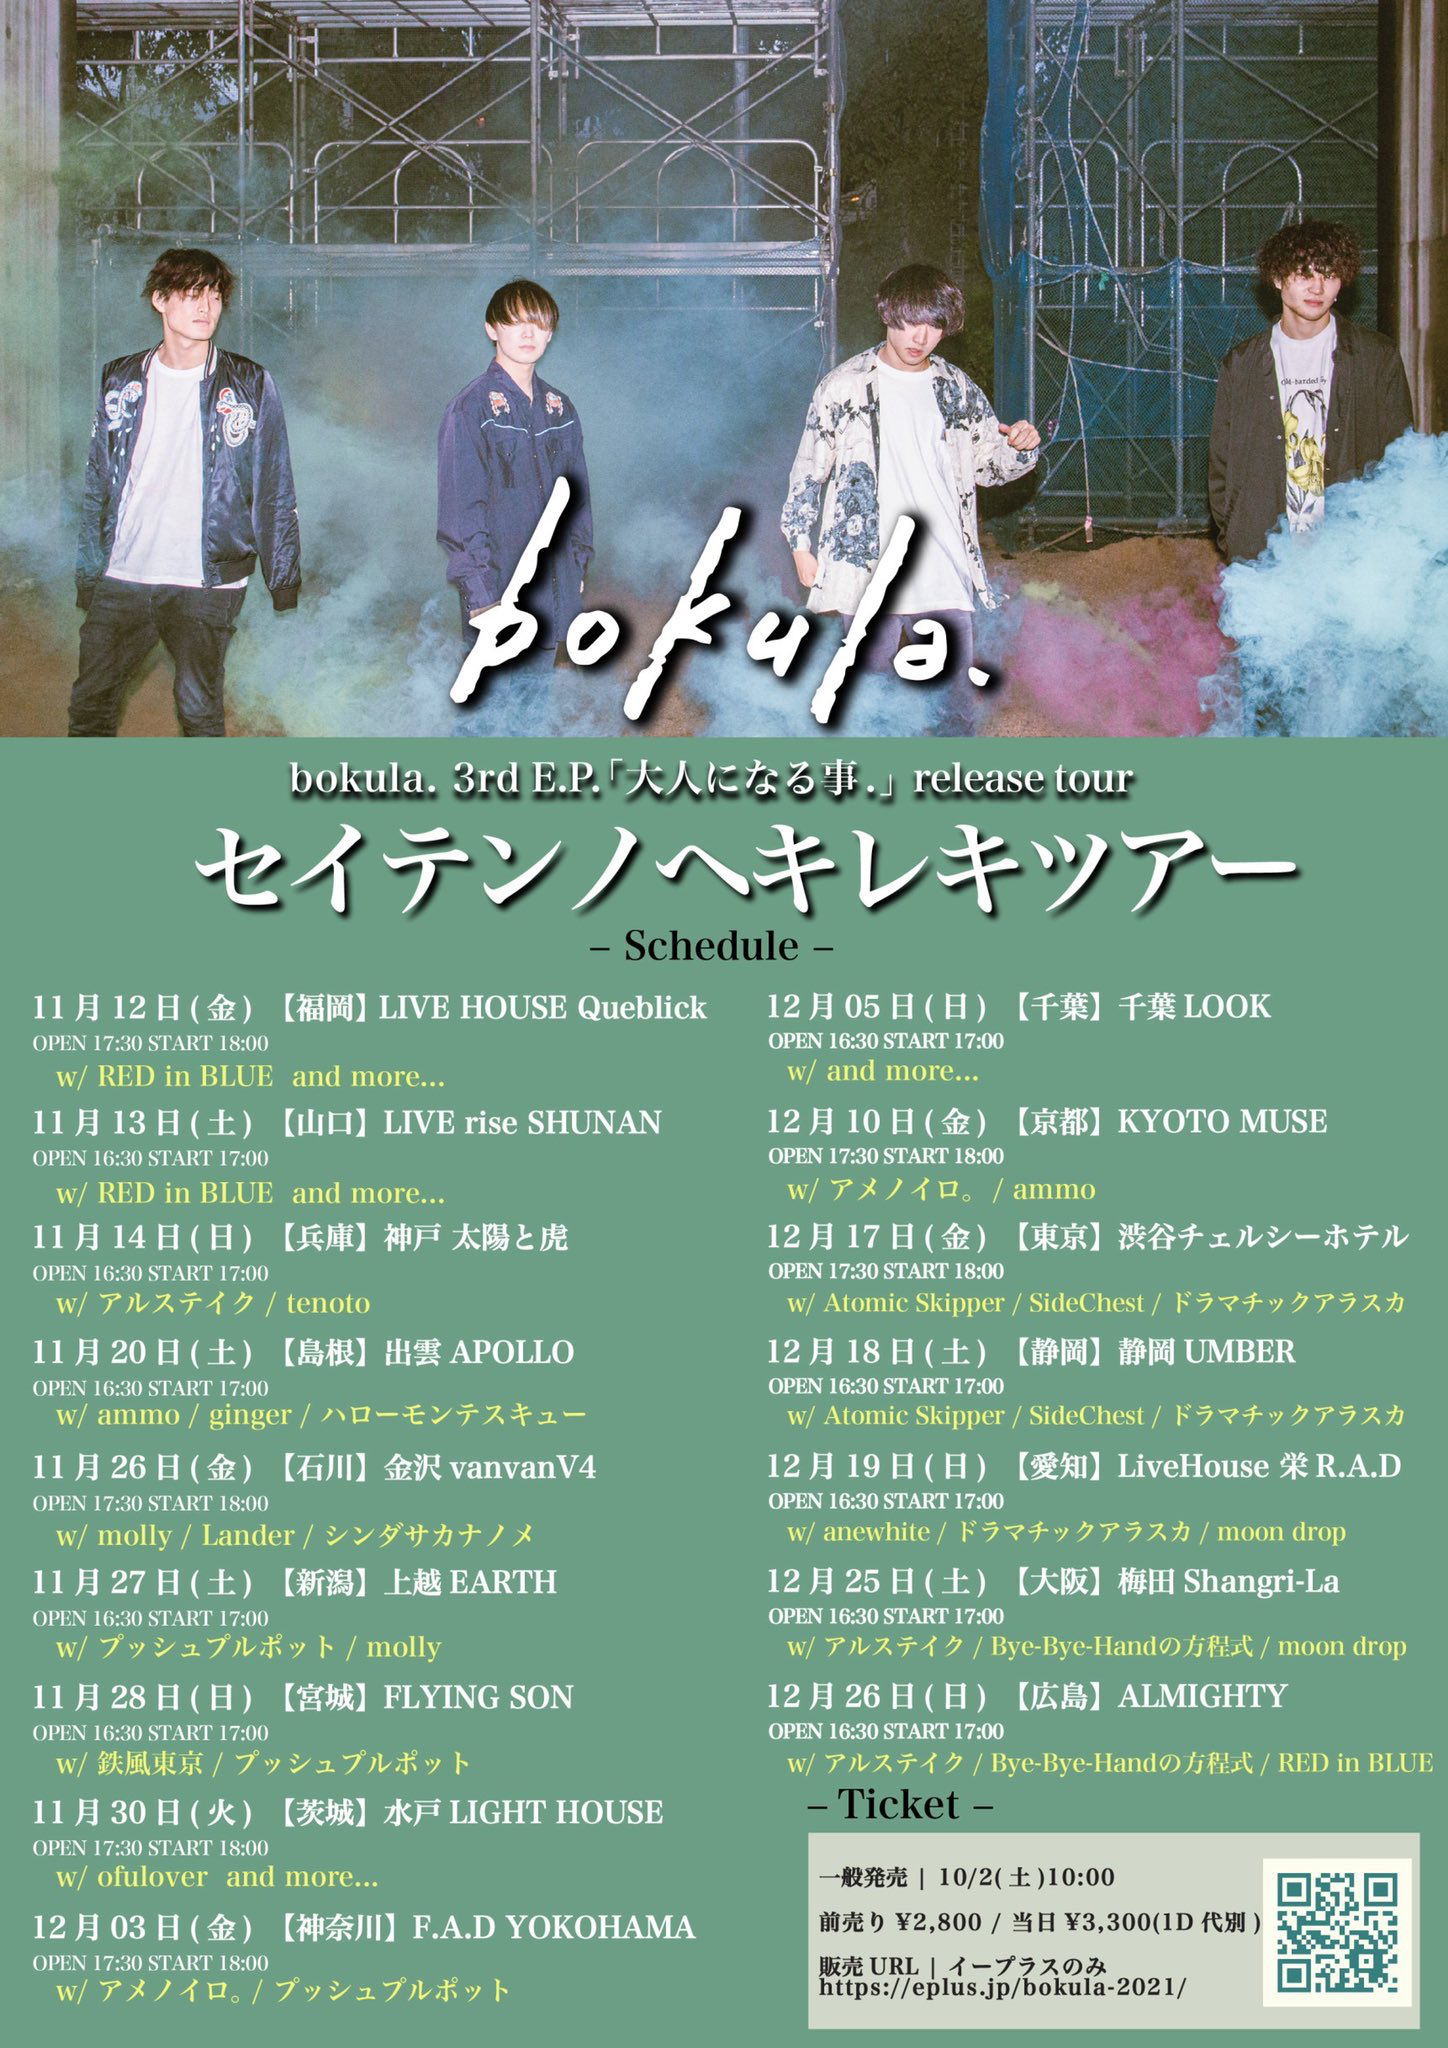 bokula.3ed E.P. 「大人になる事.」release tour “セイテンノヘキレキツアー”